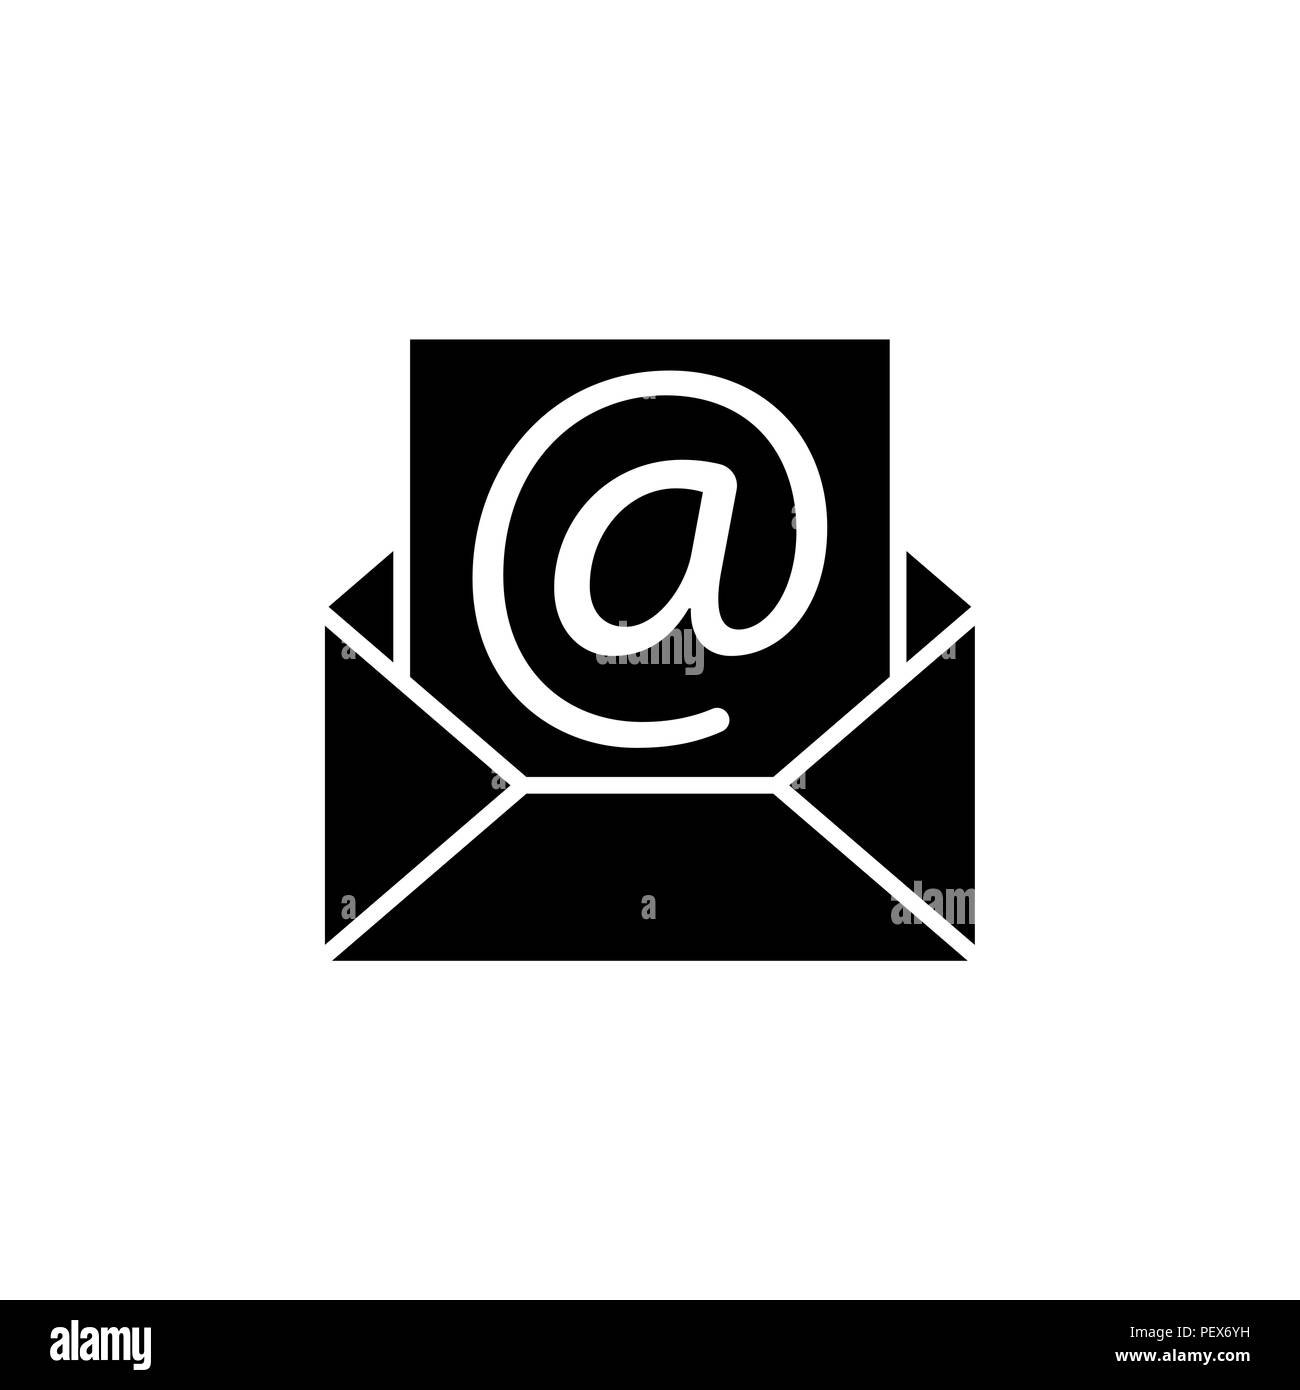 e-mail icon. Vector illustration black on white background Stock Vector